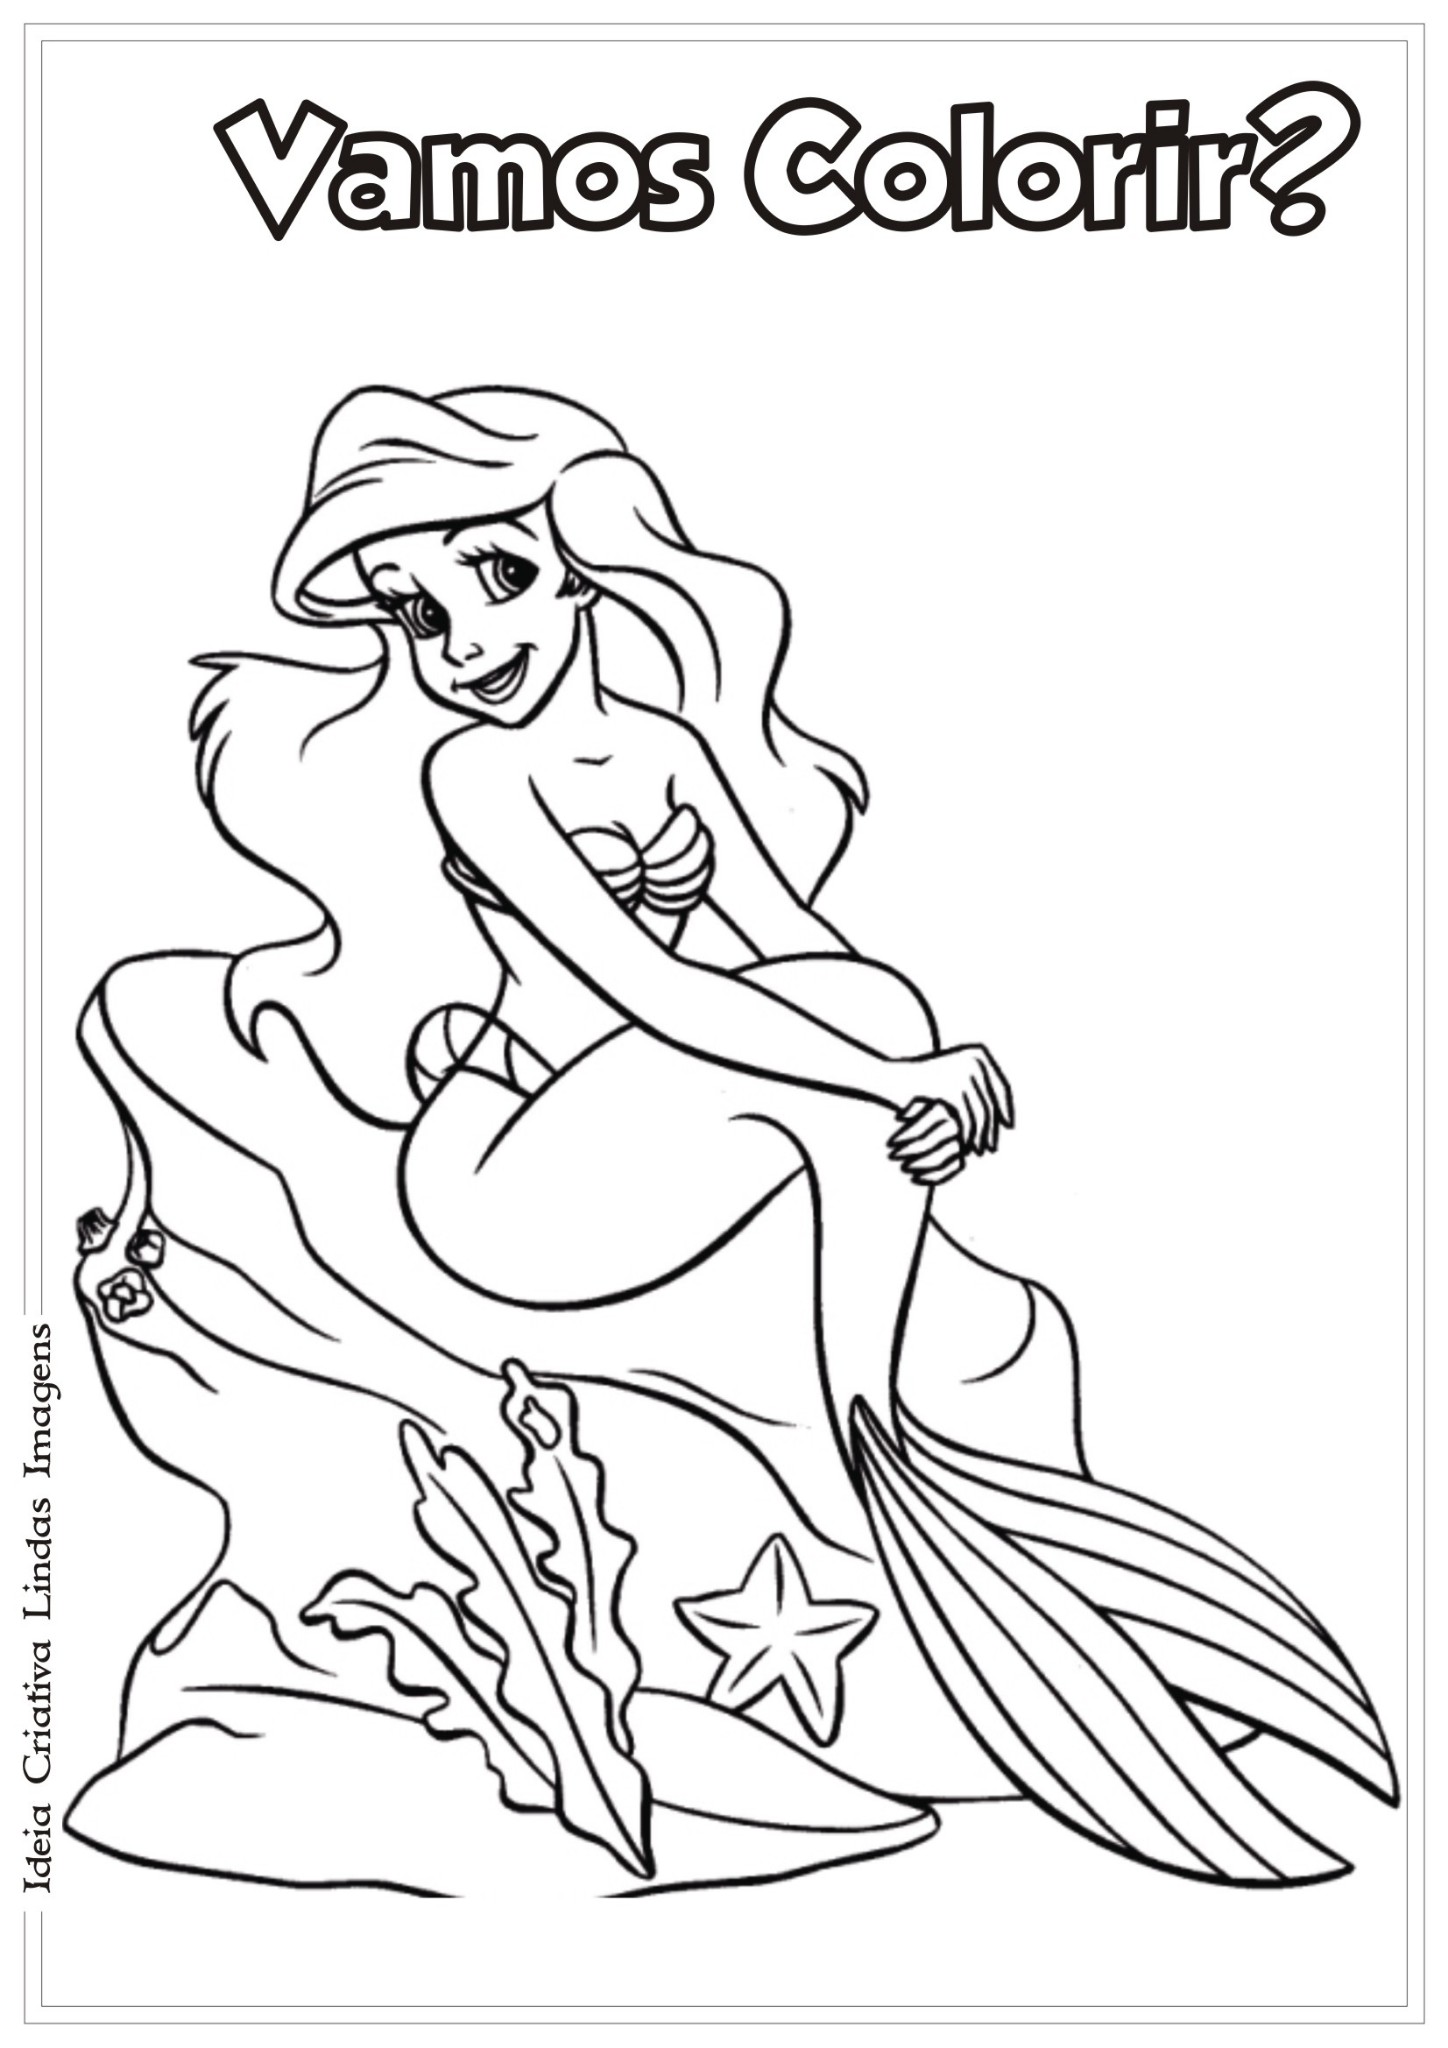 Princesa da Disney Ariel, A Pequena Sereia Pintando Desenho